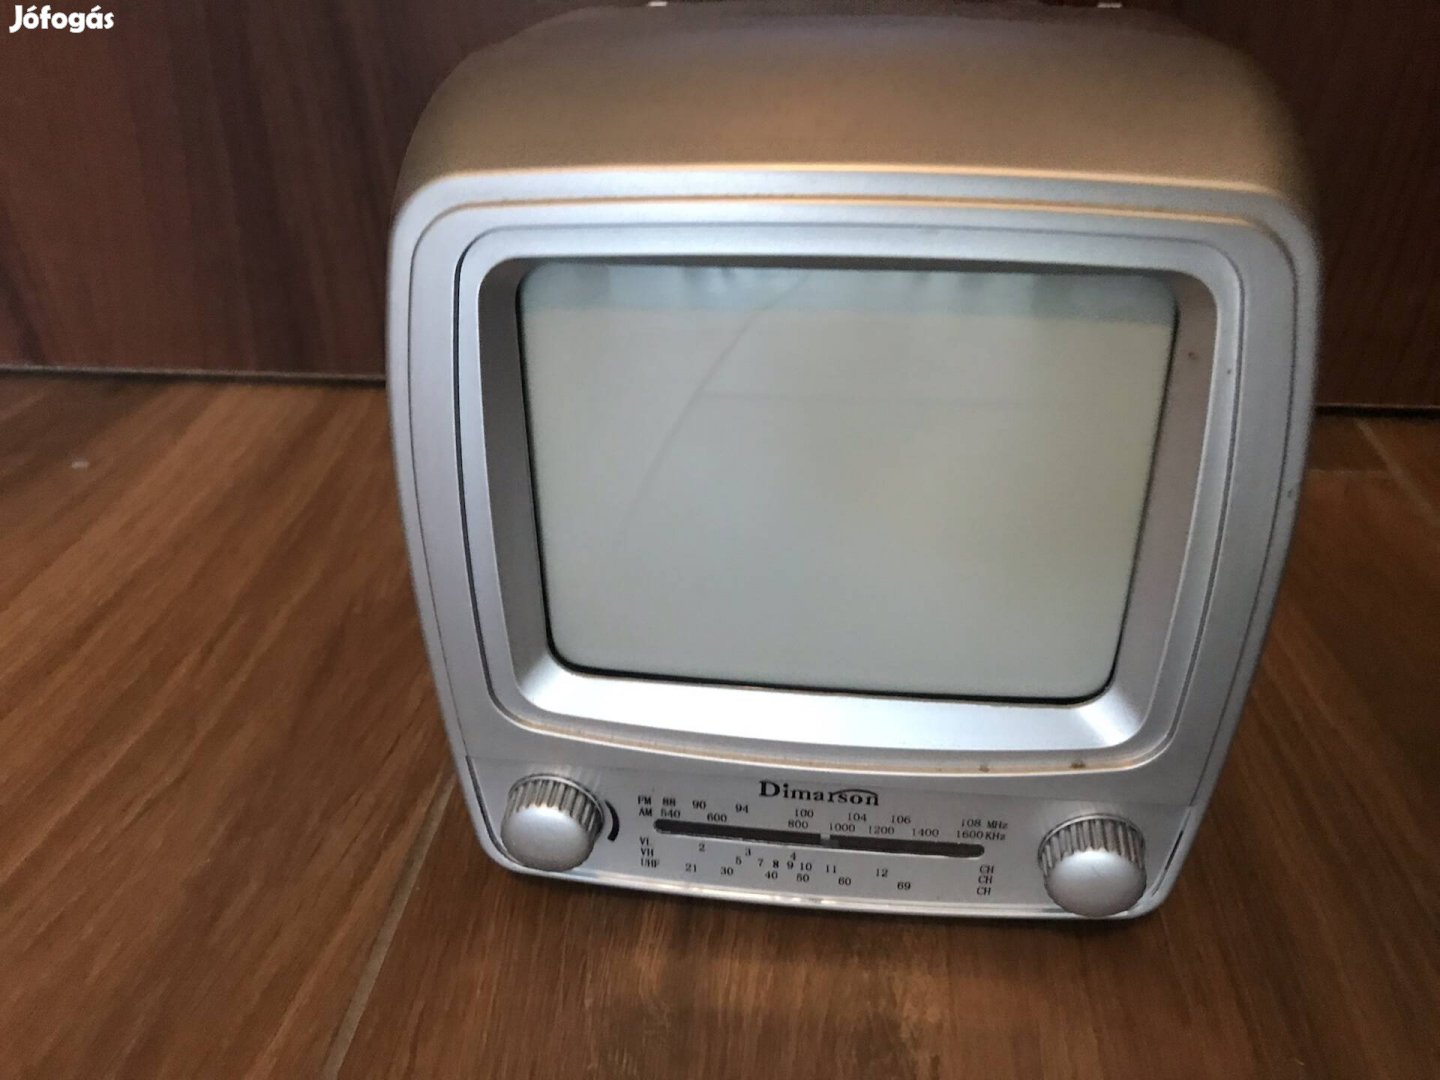 Dimarson kis szines tv, retro DM 505 model